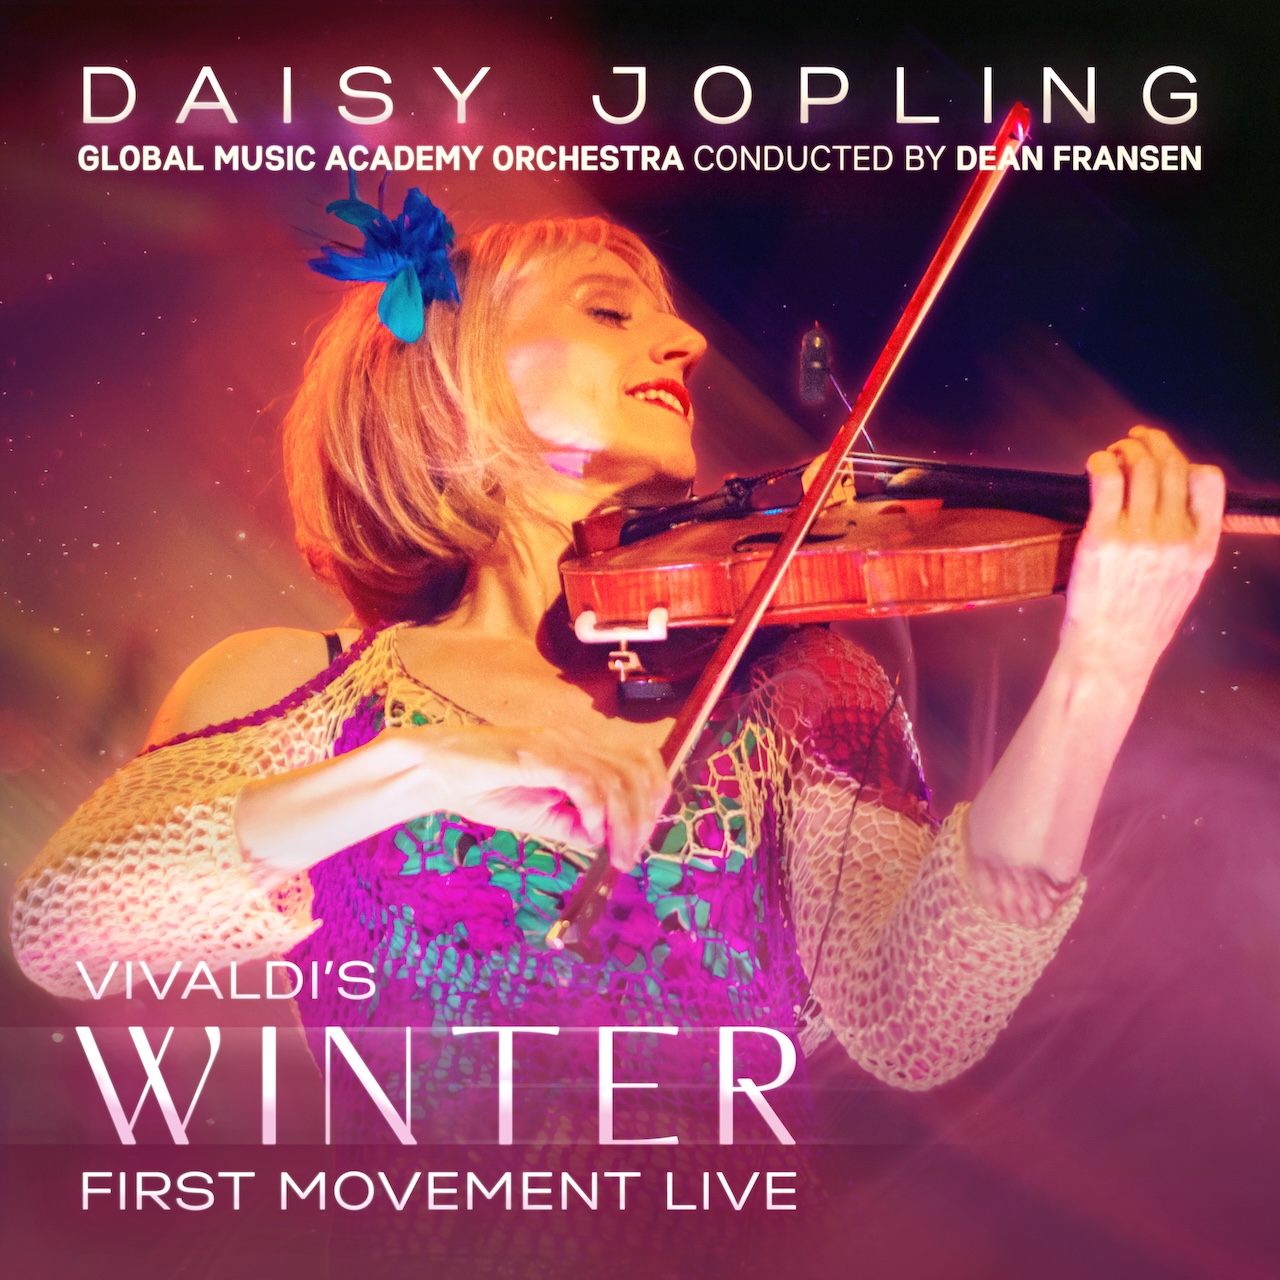 Violinist Daisy Jopling’s New Single "Vivaldi’s Winter First Movement Live" Now Available Via Tribeca Records 